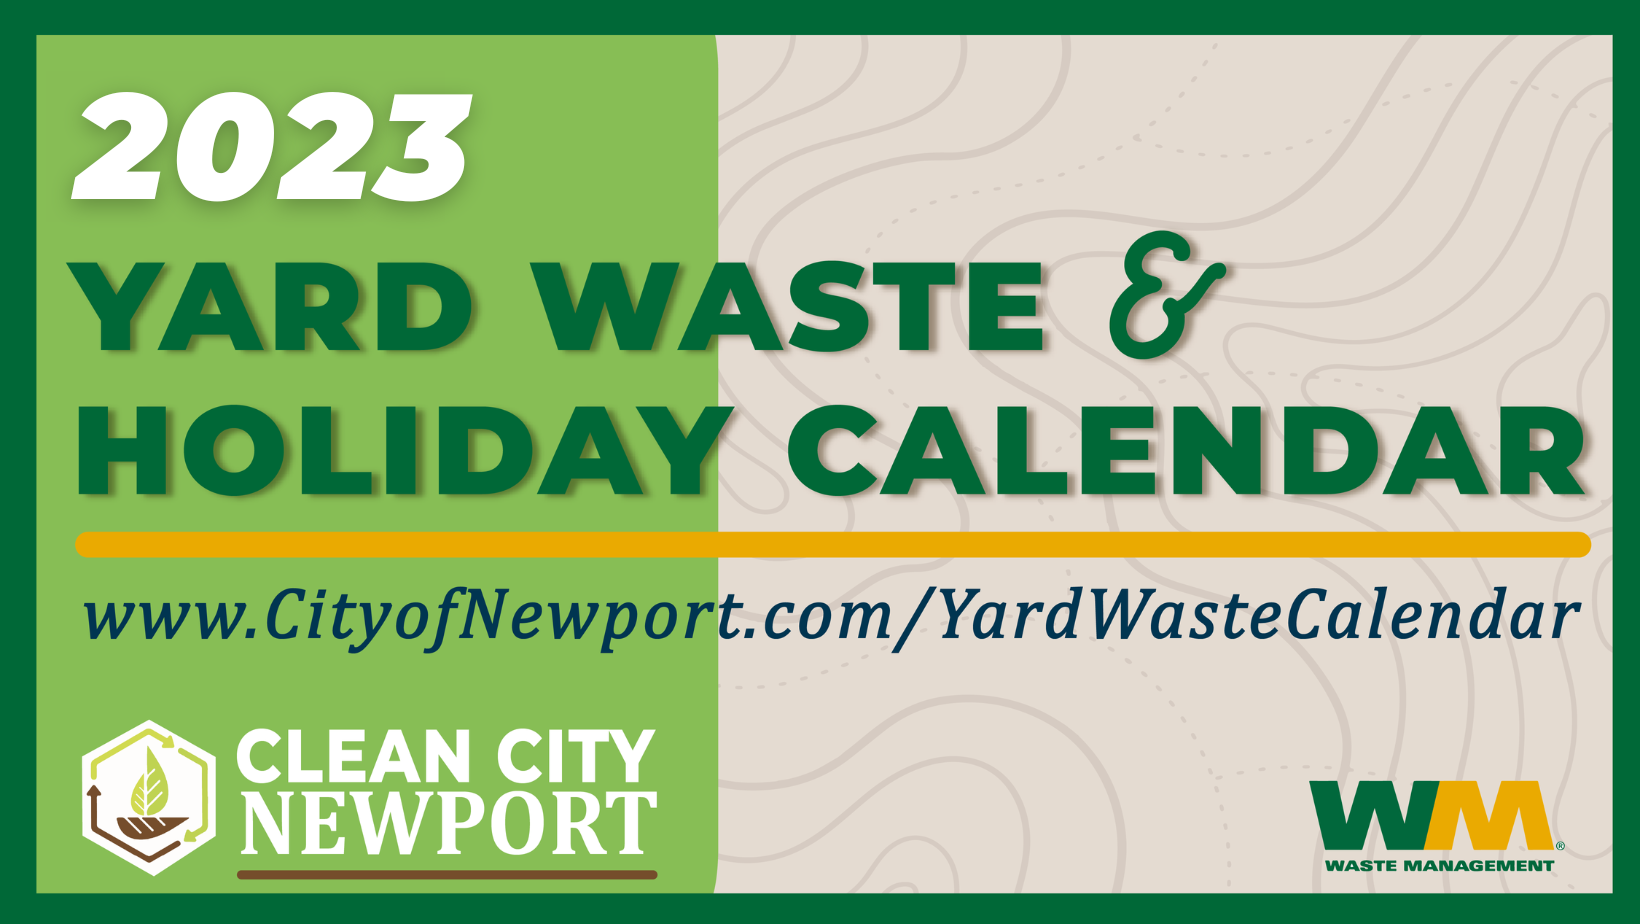 Download the 2023 Yard Waste & Holiday Trash Calendar